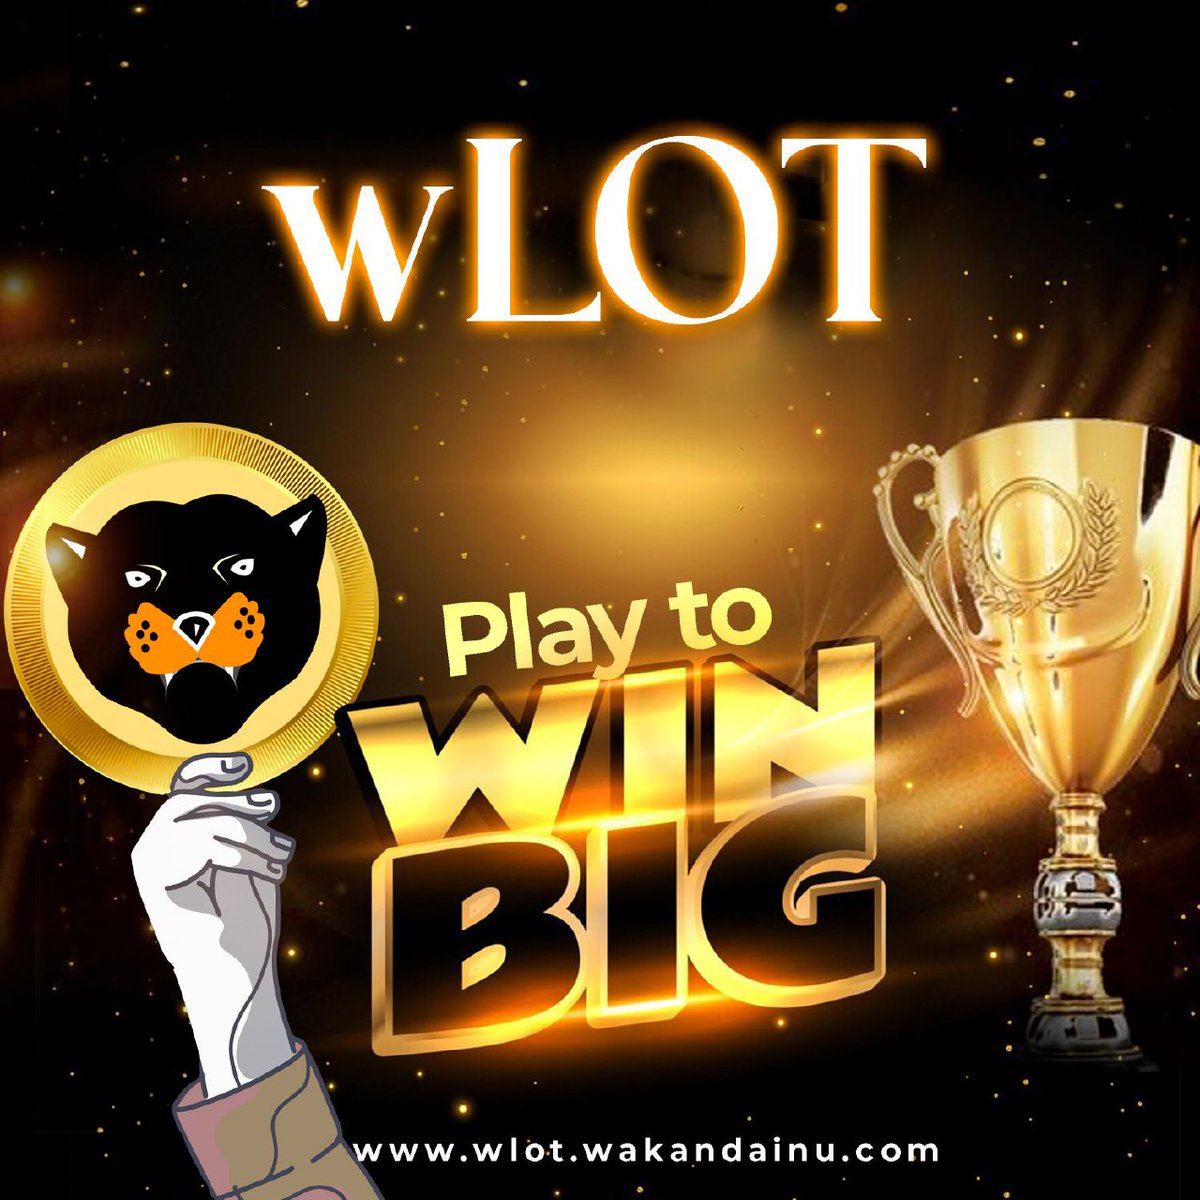 wLOT (#28) Currently OPEN Remaining Entries 5 to go !!! Join Now with 100 M WKD : wlot.wakandainu.com Prizes 1st - 280 M WKD 2nd - 175 M WKD 3rd - 105 M WKD